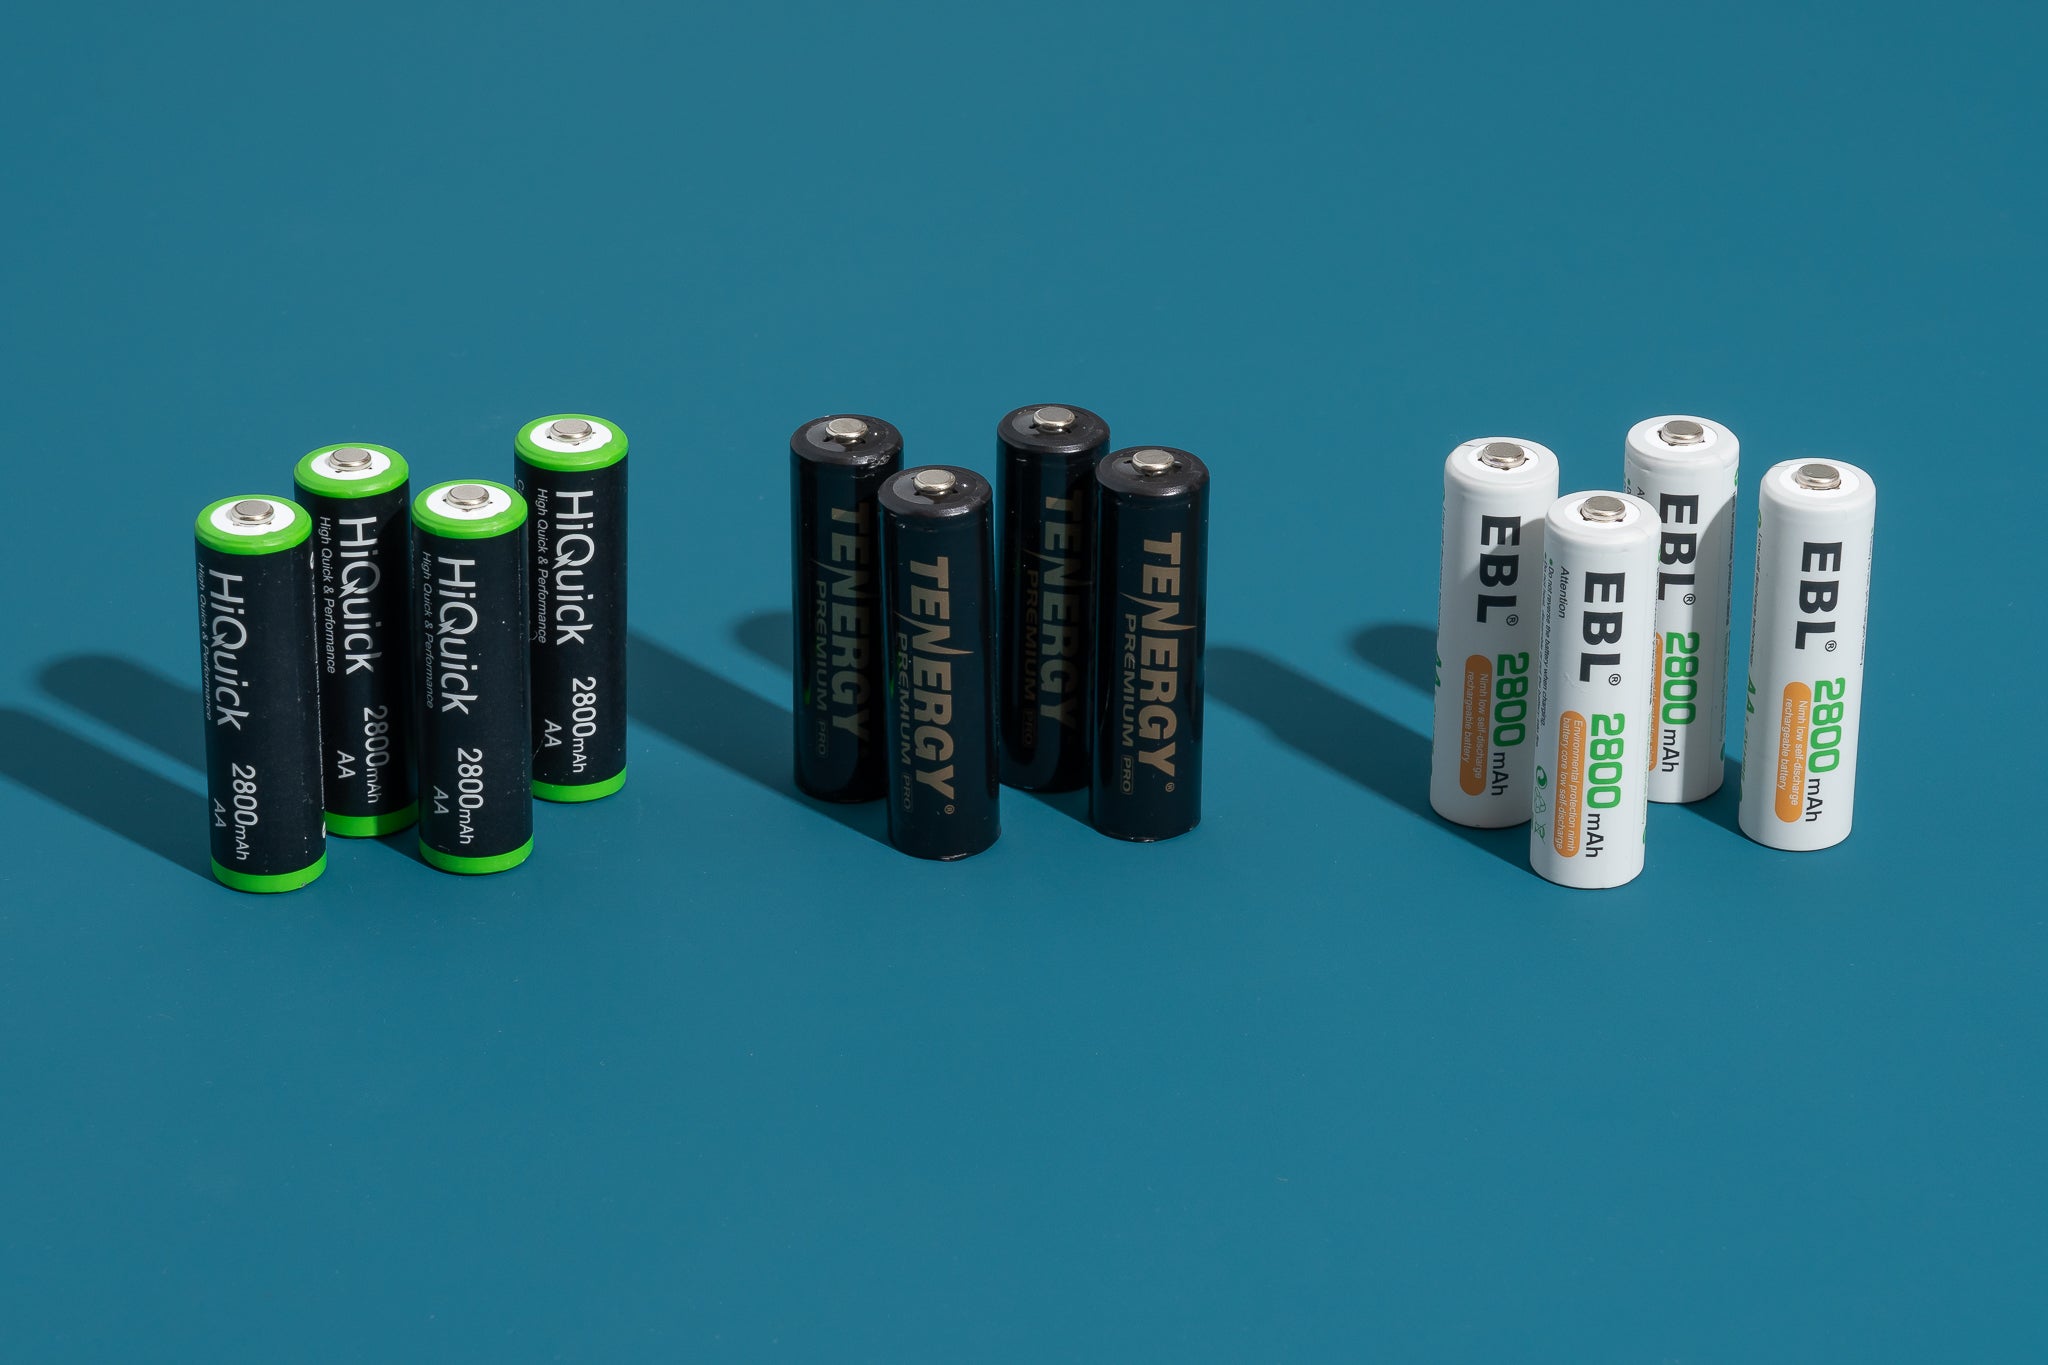 Amps In Action: Understanding The Power Of AA Batteries